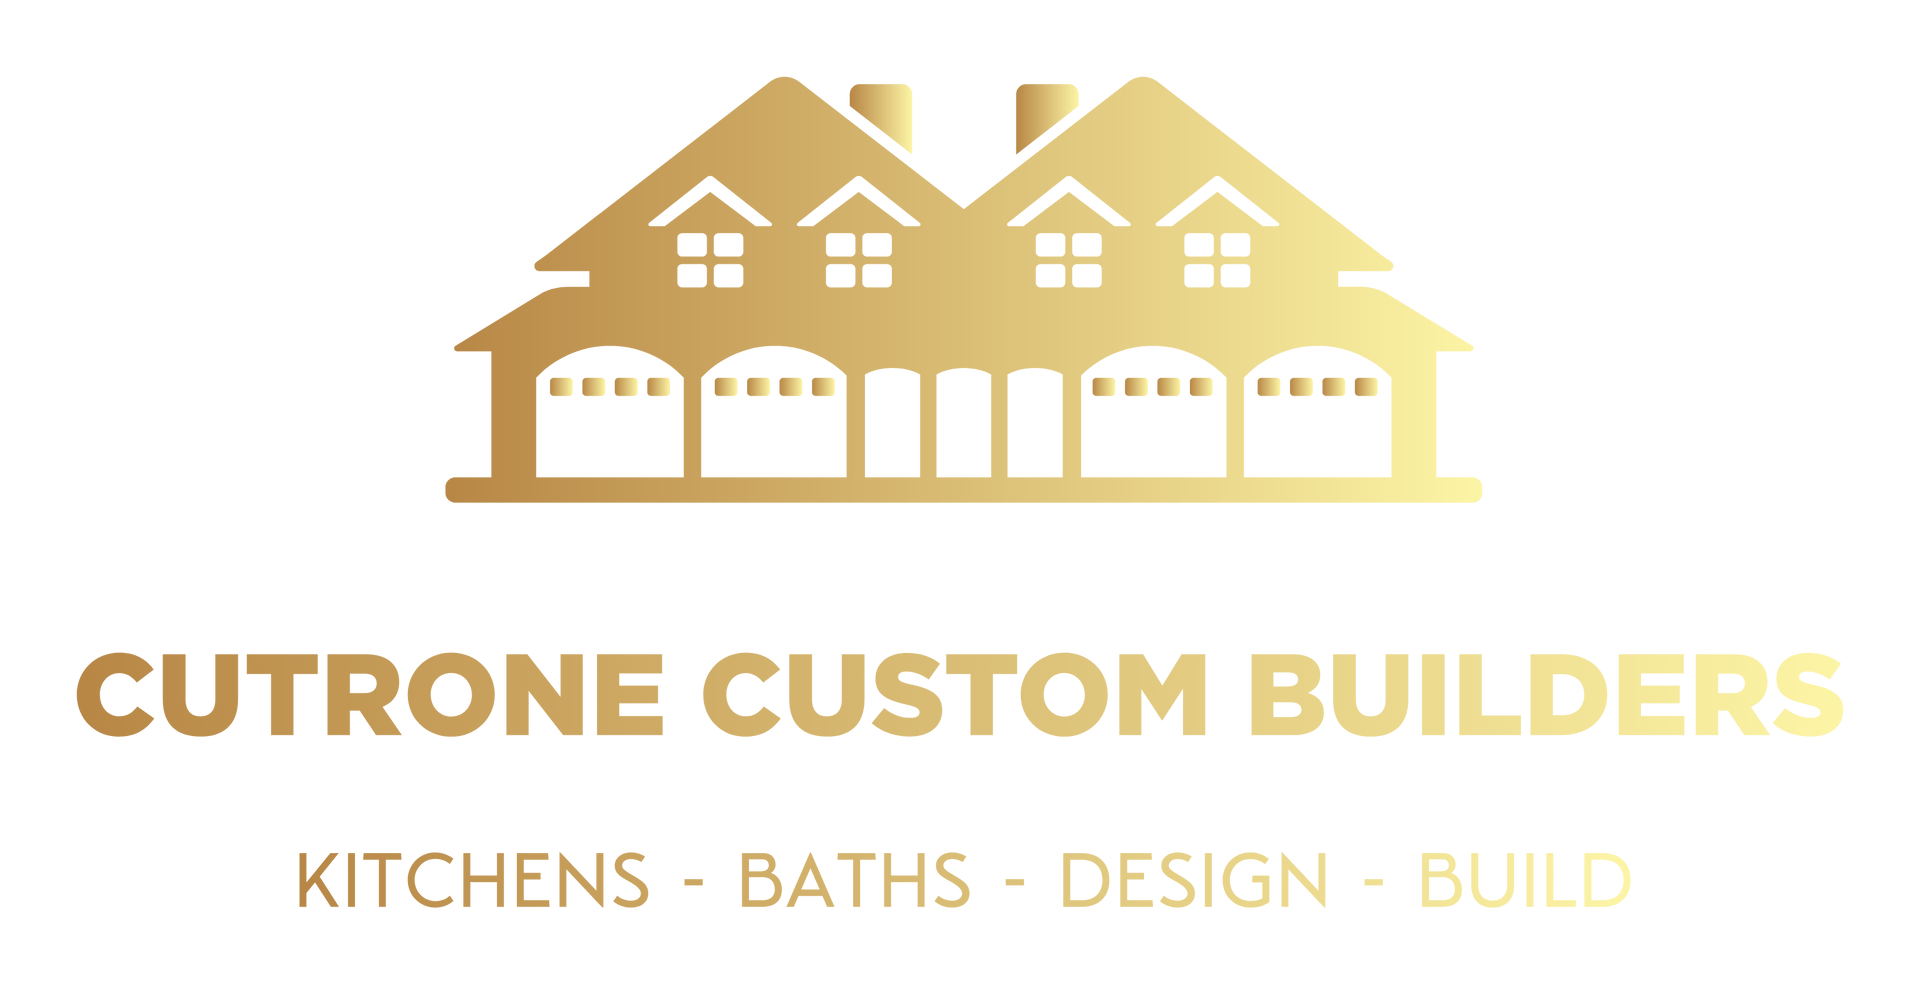 Cutrone Custom Builders